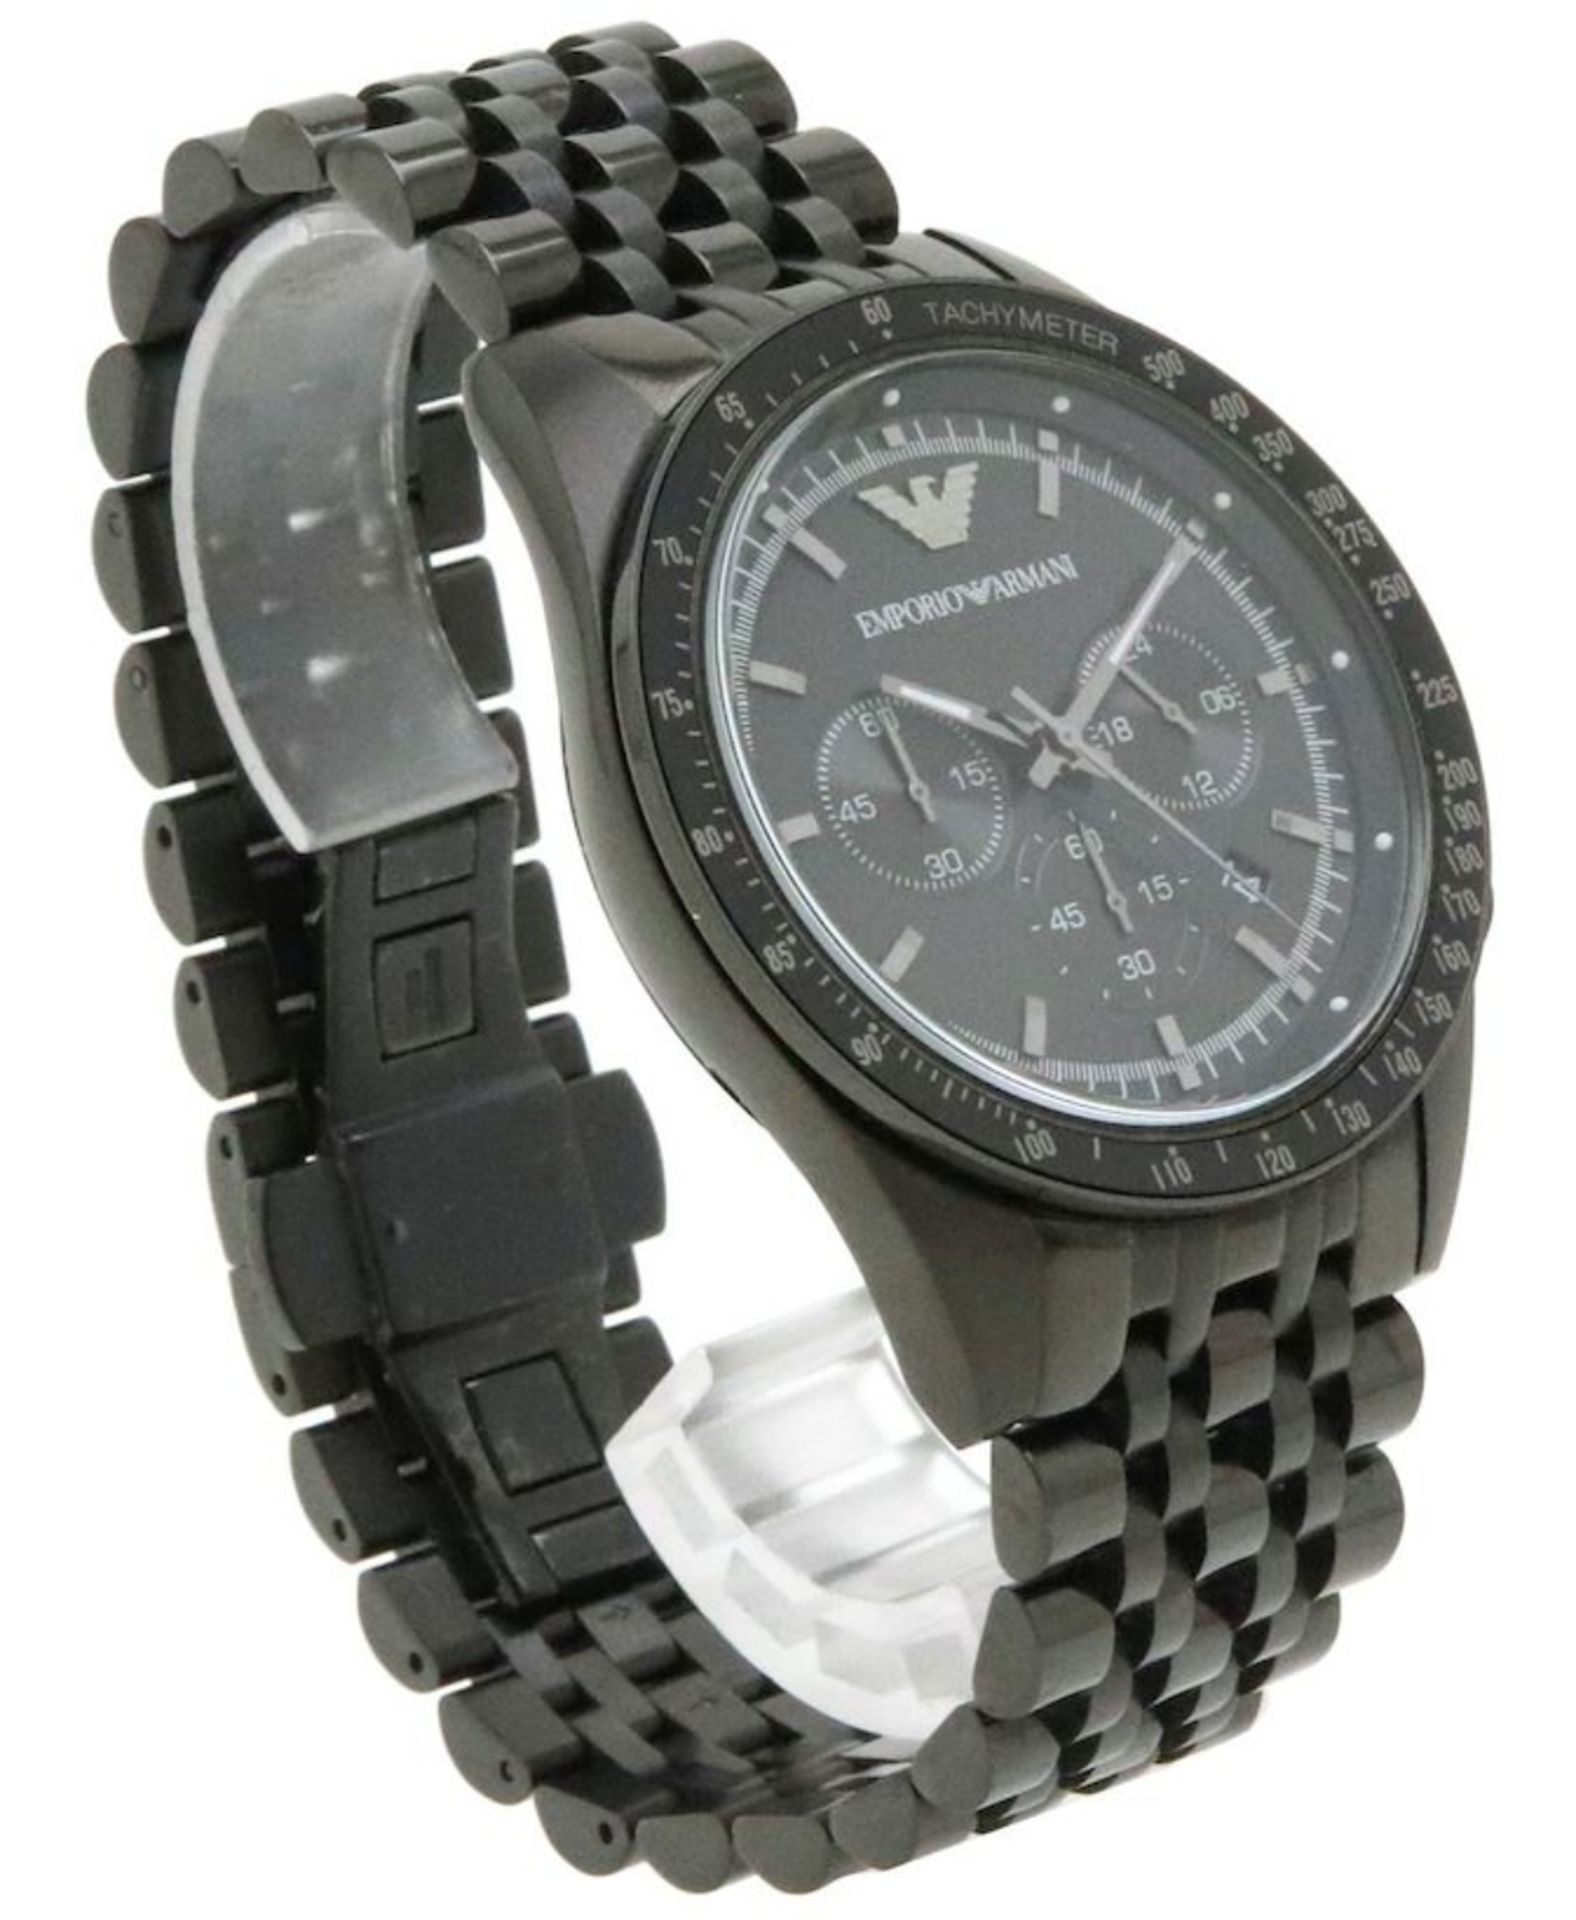 Emporio Armani AR5989 Men's Tazio Black Stainless Steel Bracelet Chronograph Watch - Image 3 of 5